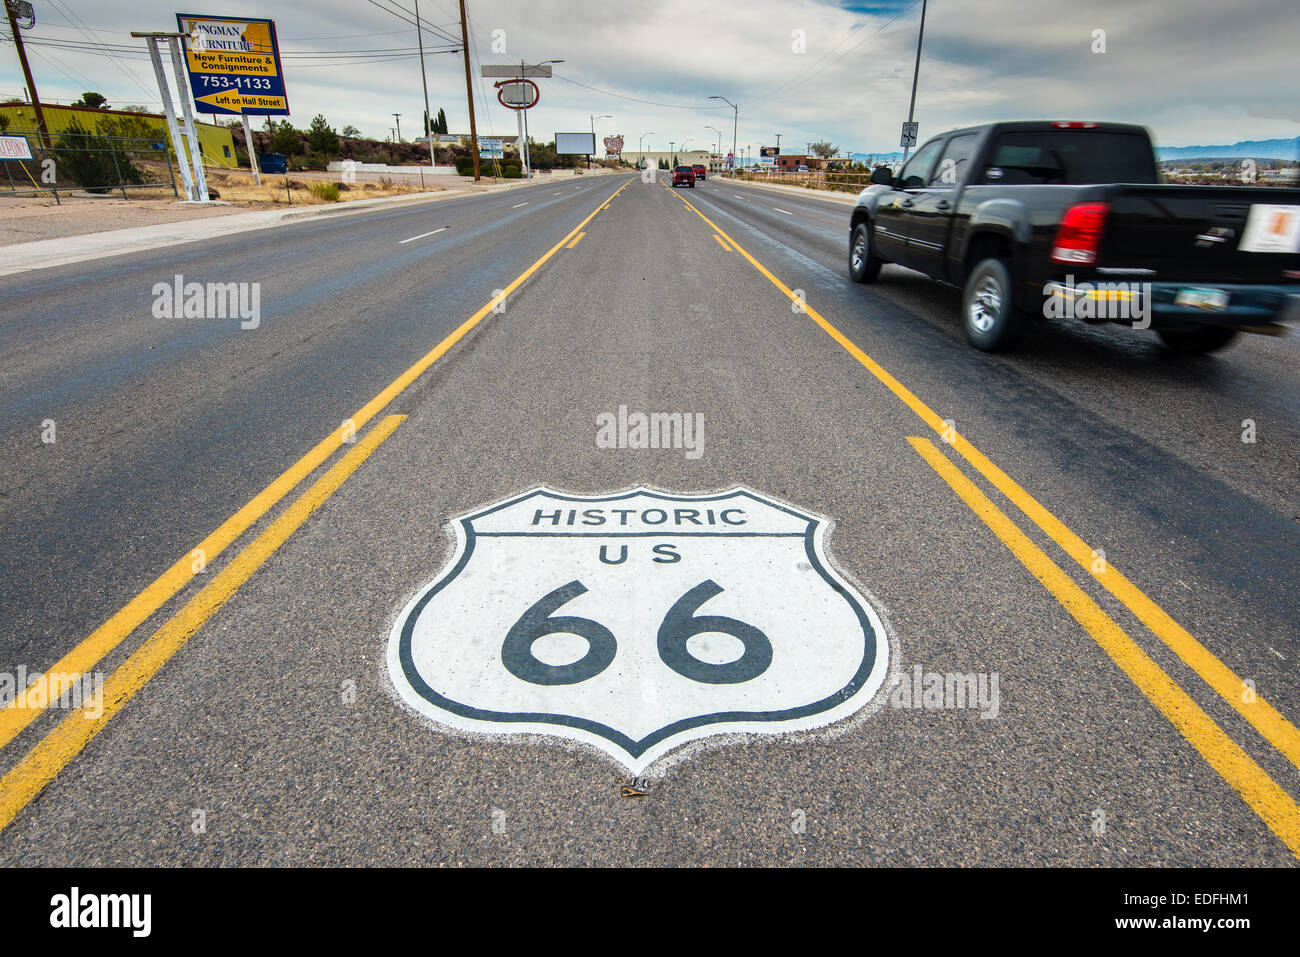 Histórica Ruta 66 de EE.UU. señal de carretera horizontal, Kingman, Arizona, EE.UU. Foto de stock